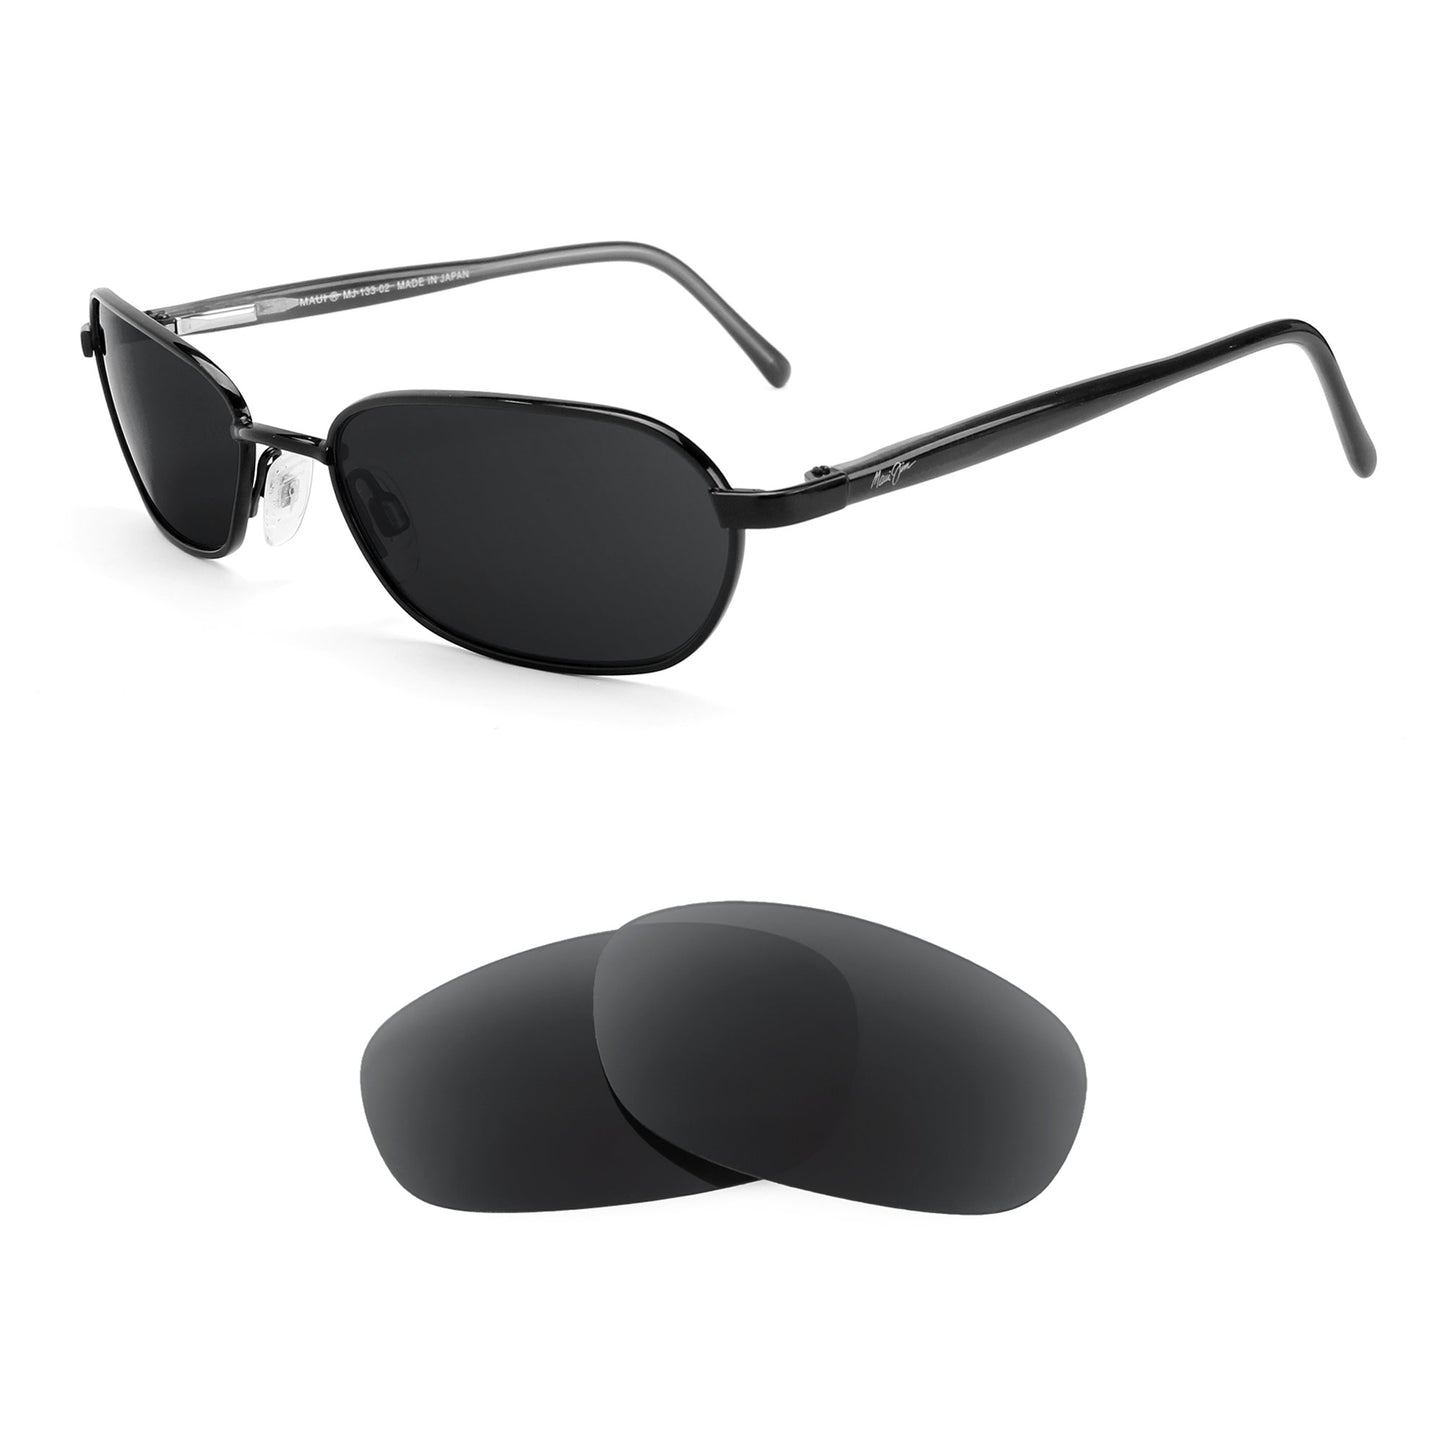 Maui Jim Hilo MJ133 sunglasses with replacement lenses